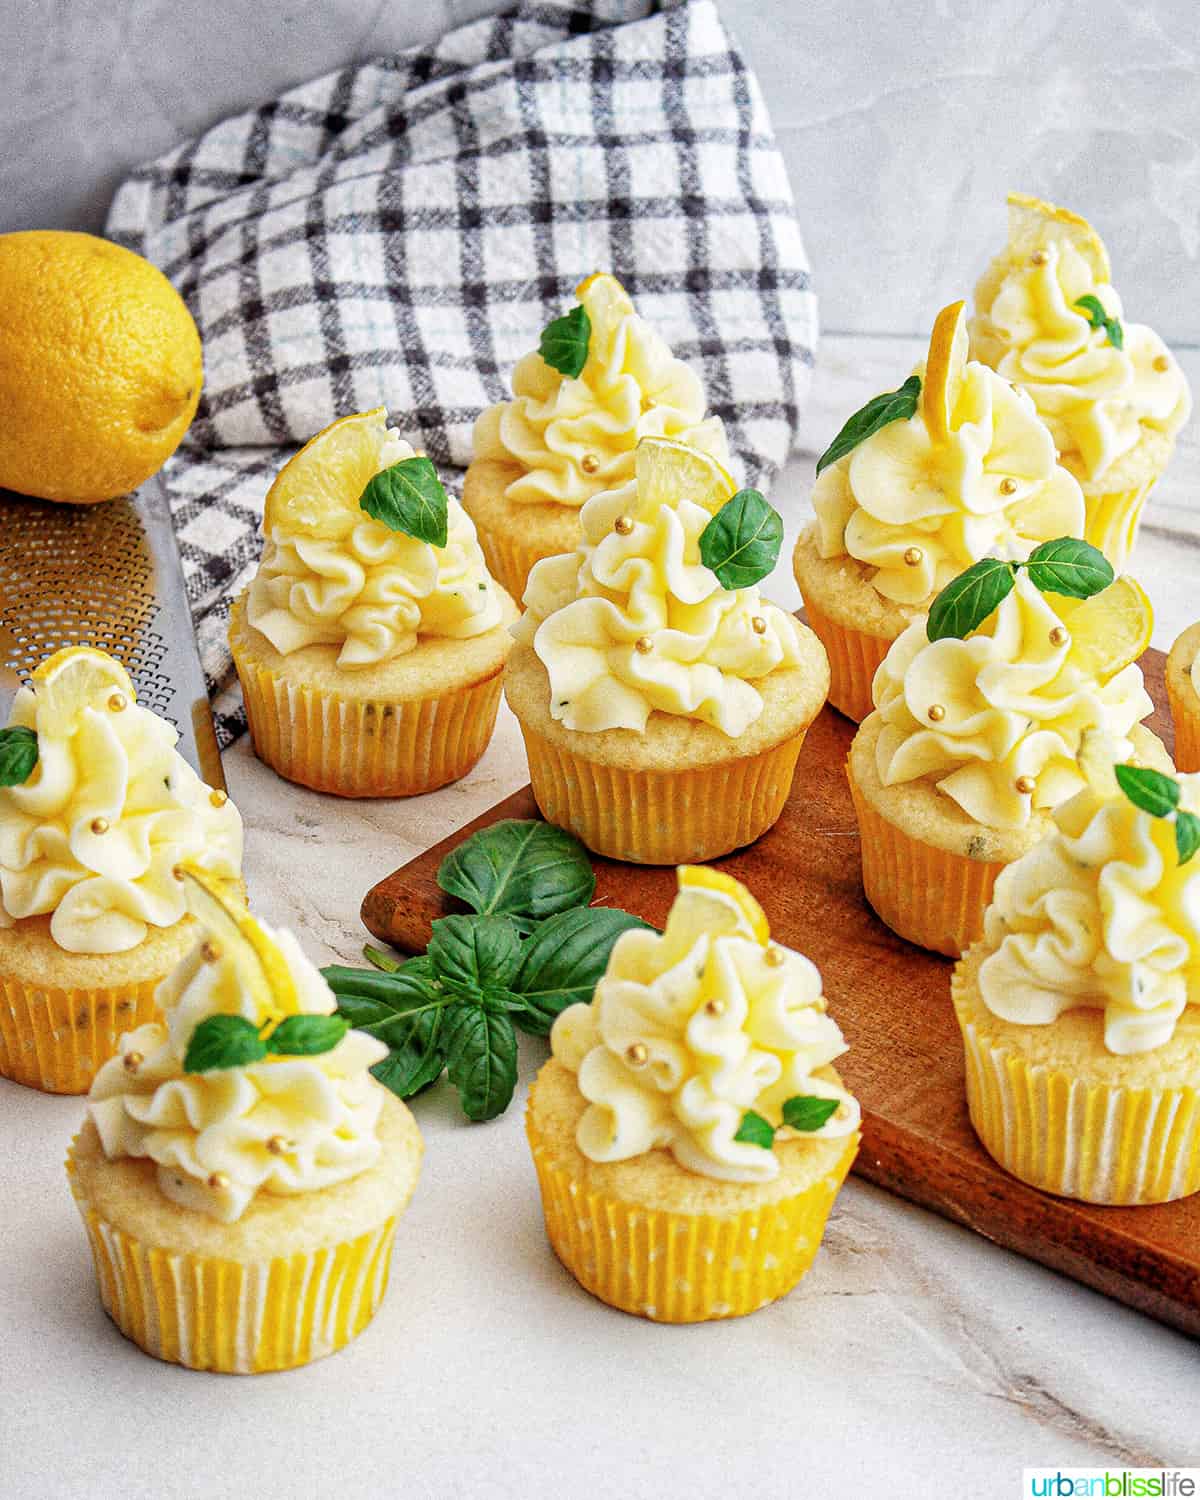 group of lemon basil cupcakes with lemon buttercream frosting and garnish of basil leaves and lemon slice.